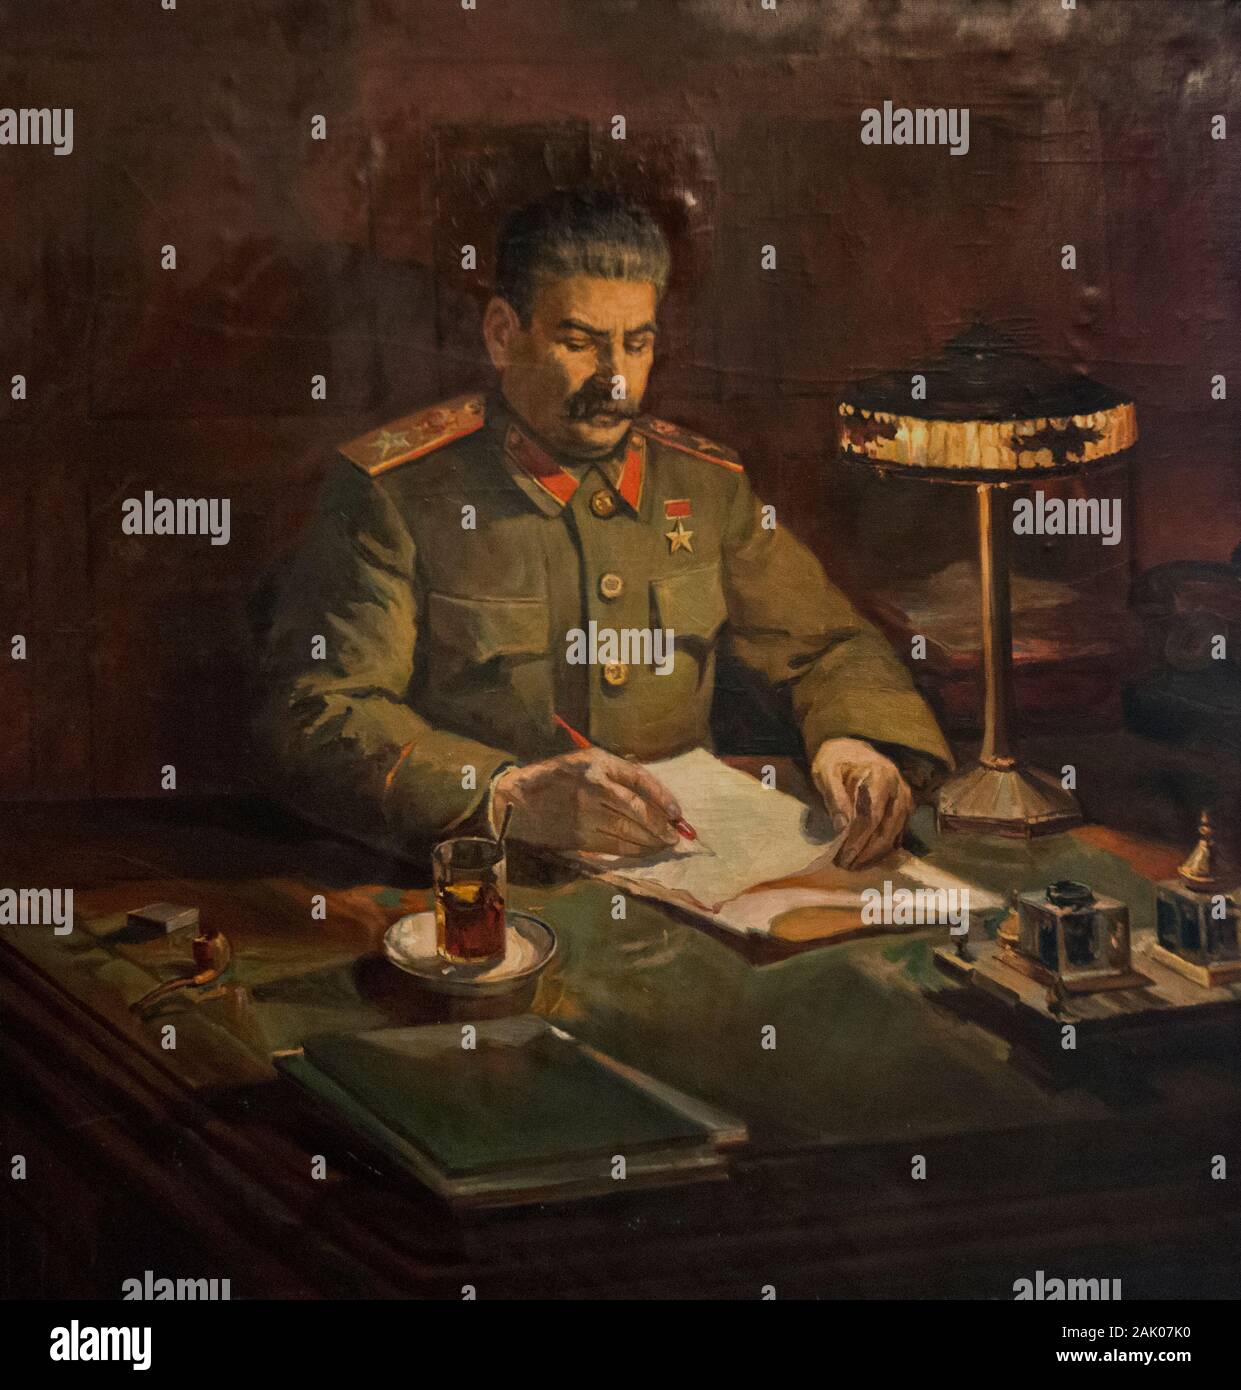 Joseph Stalin portrait, by Dmitry Nalbandyan Stock Photo